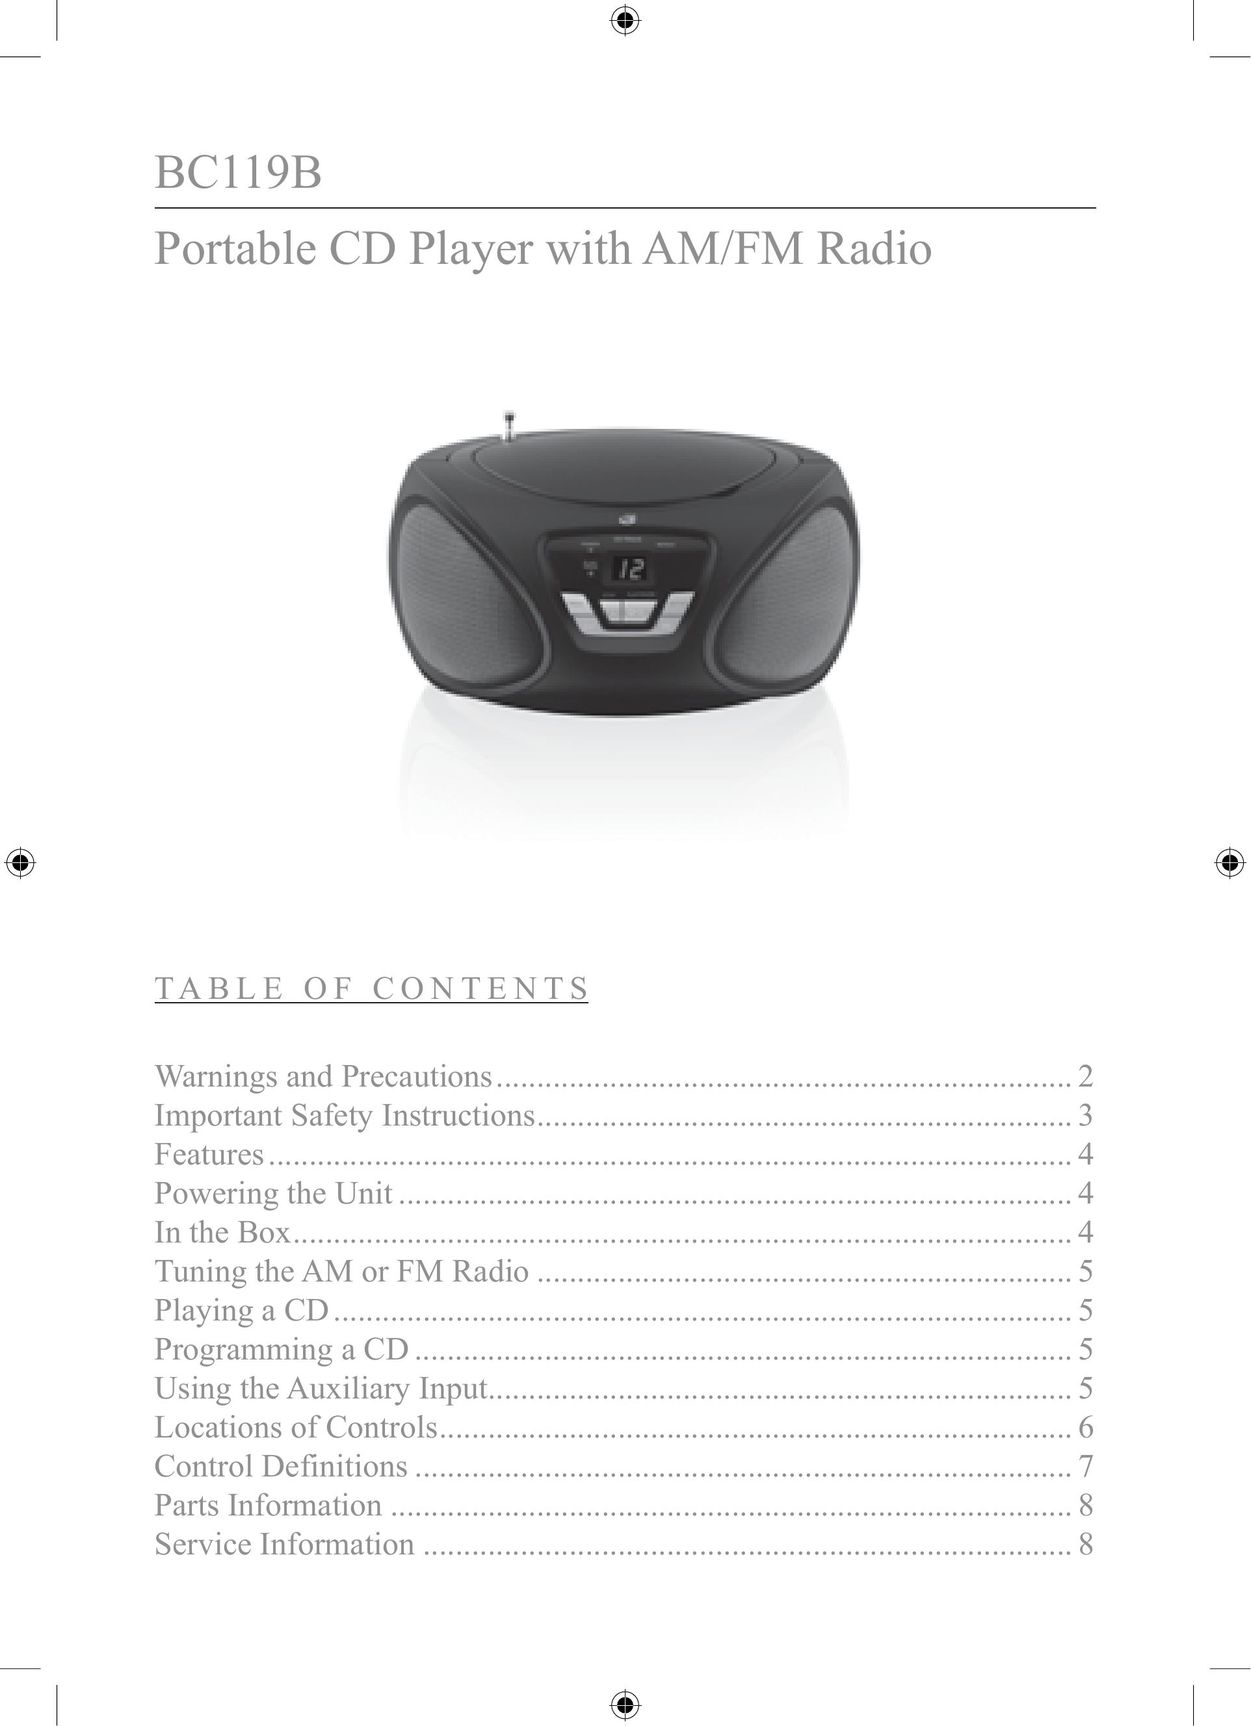 GPX BC119B Portable CD Player User Manual